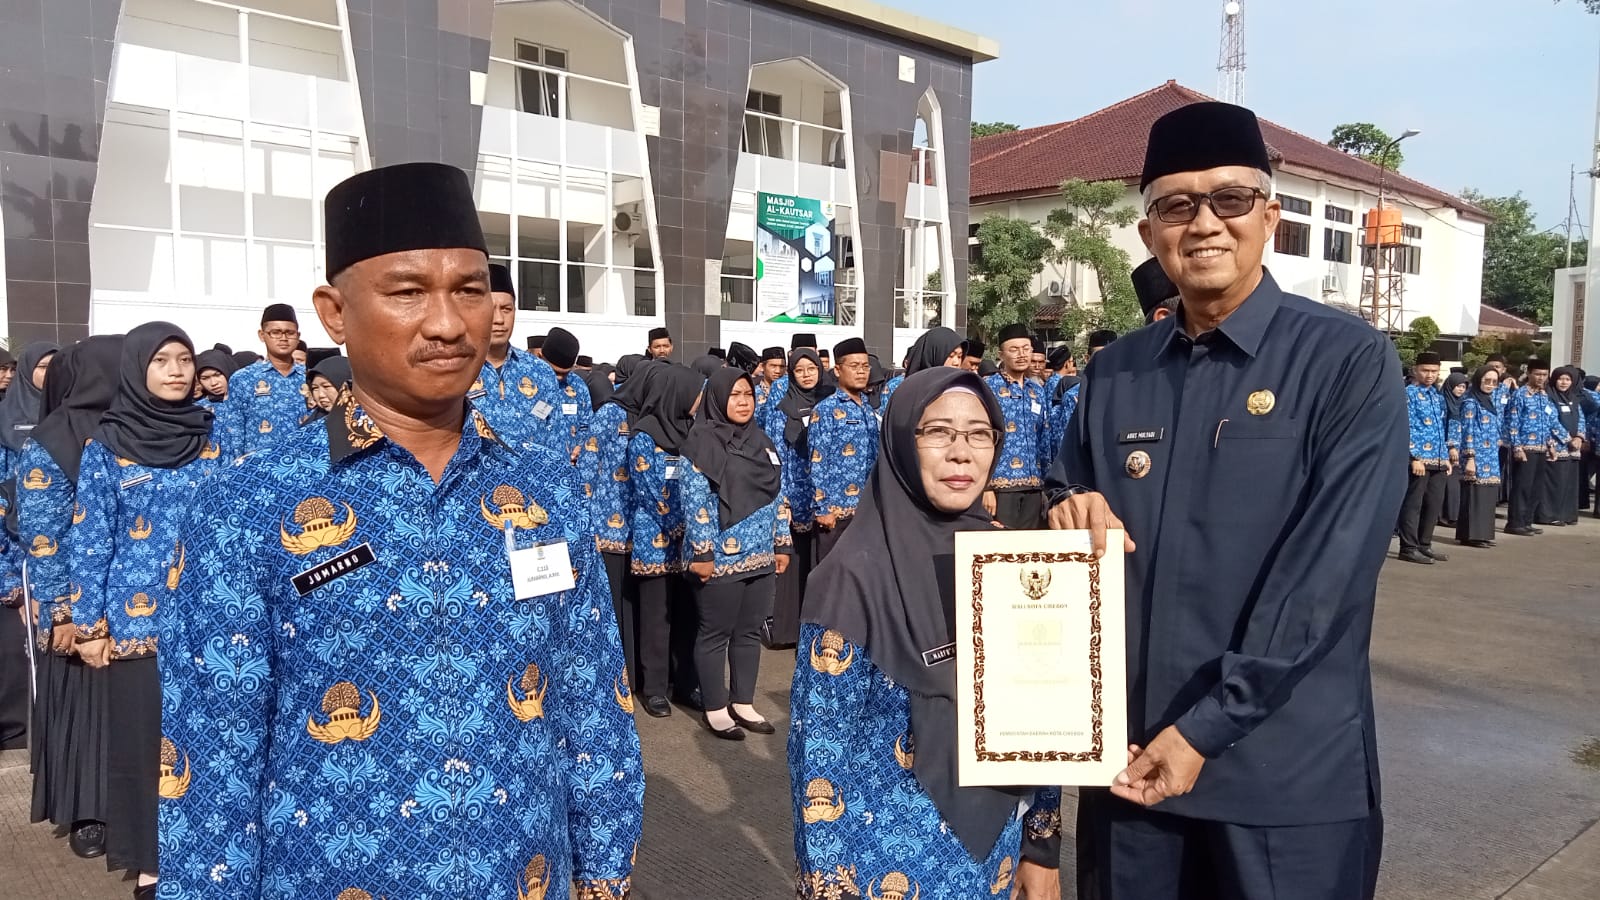 Lantik 691 PPPK, Inilah Pesan Pj Wali Kota Cirebon, Asli Wajib Dicatat! 